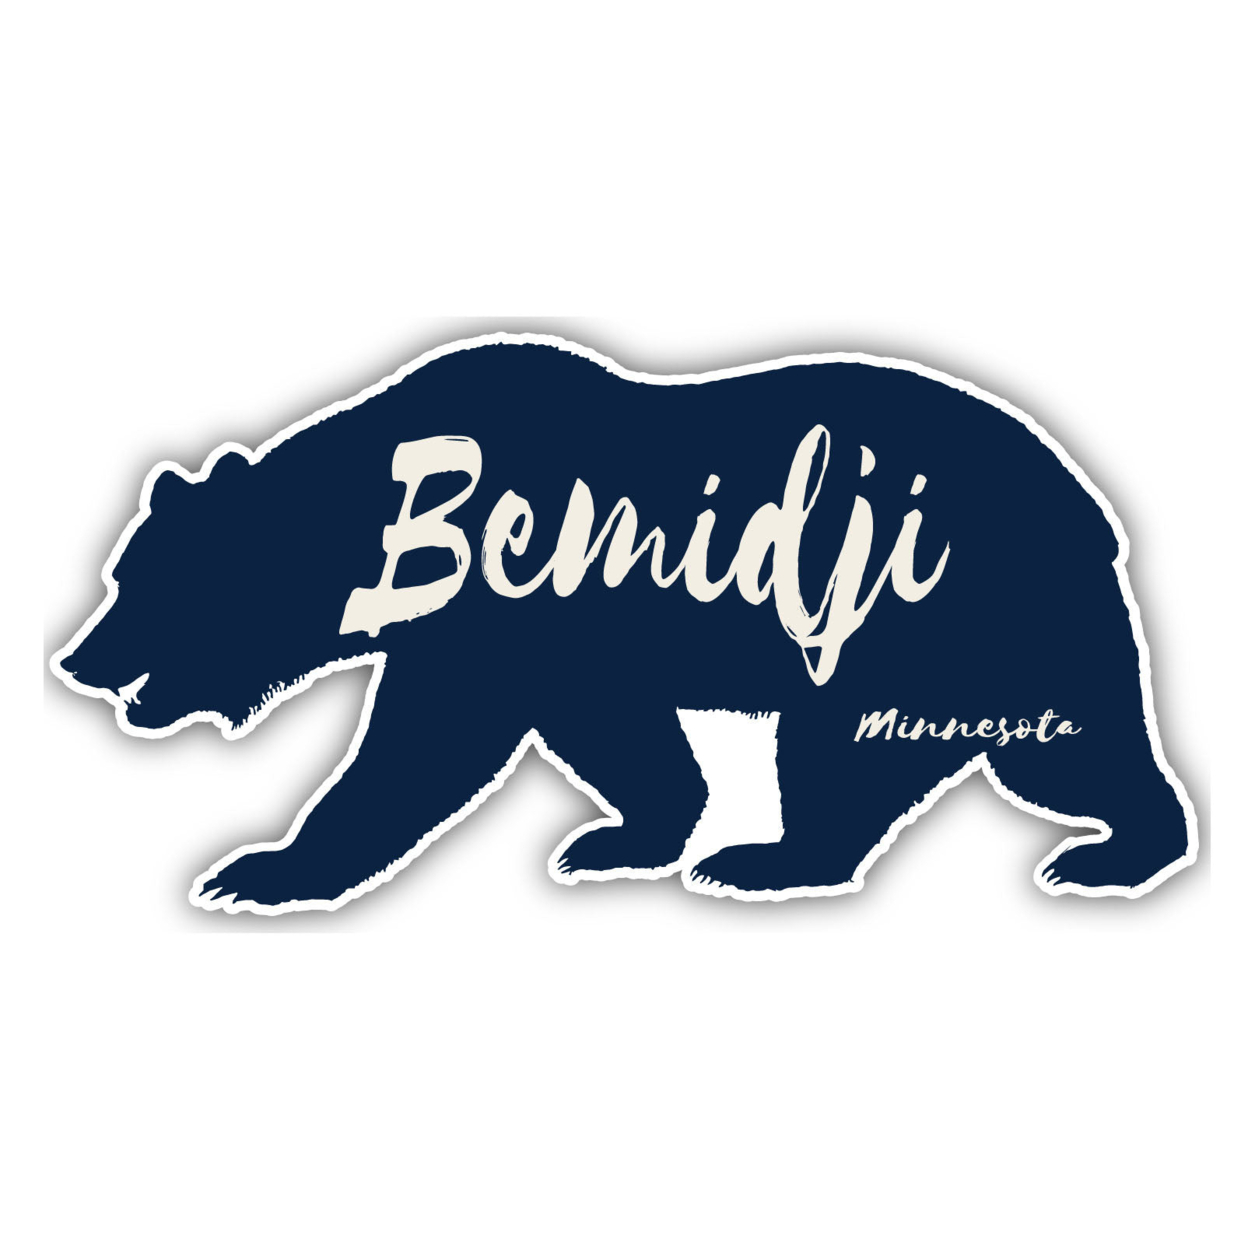 Bemidji Minnesota Souvenir Decorative Stickers (Choose Theme And Size) - 4-Pack, 8-Inch, Bear